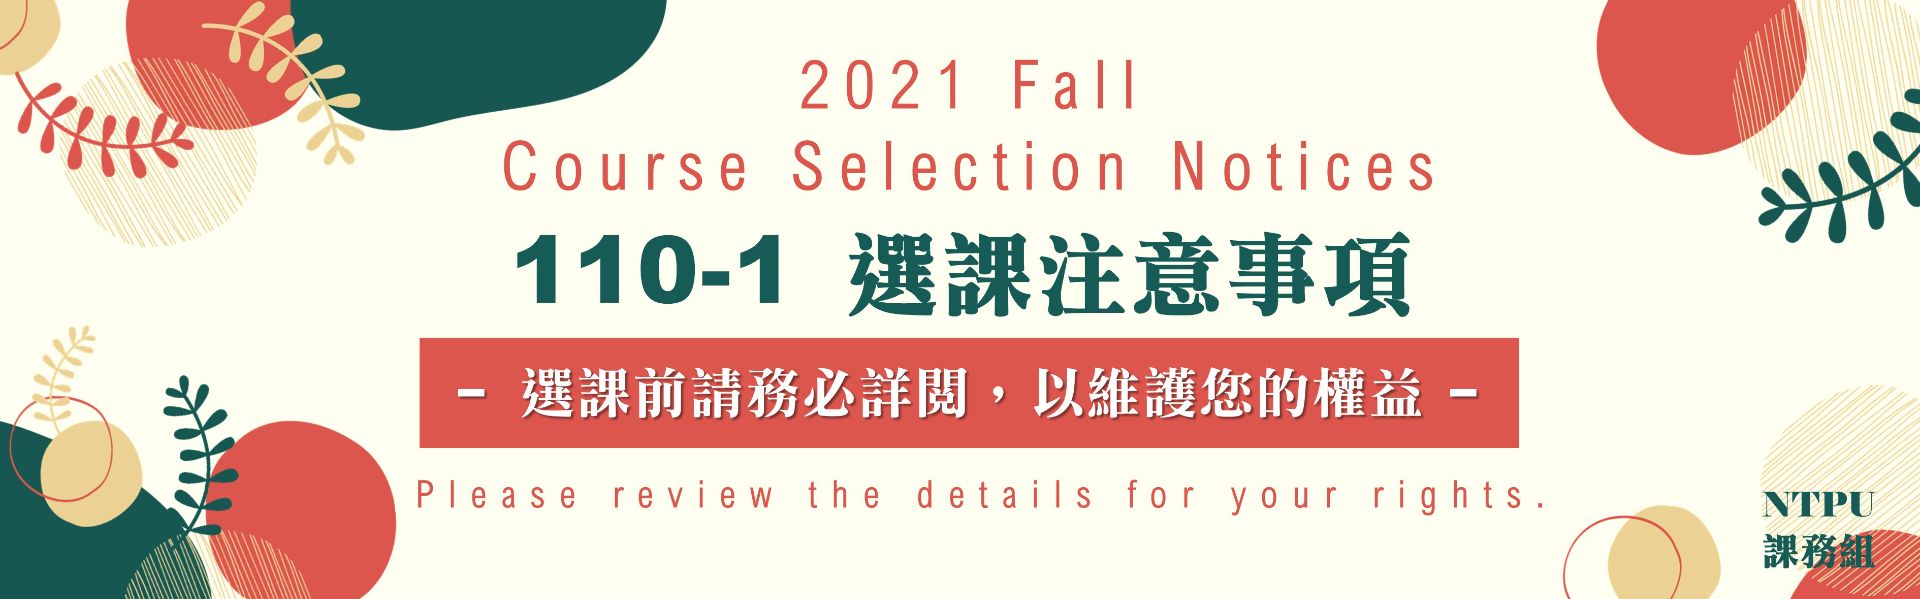 2021 Fall course selection